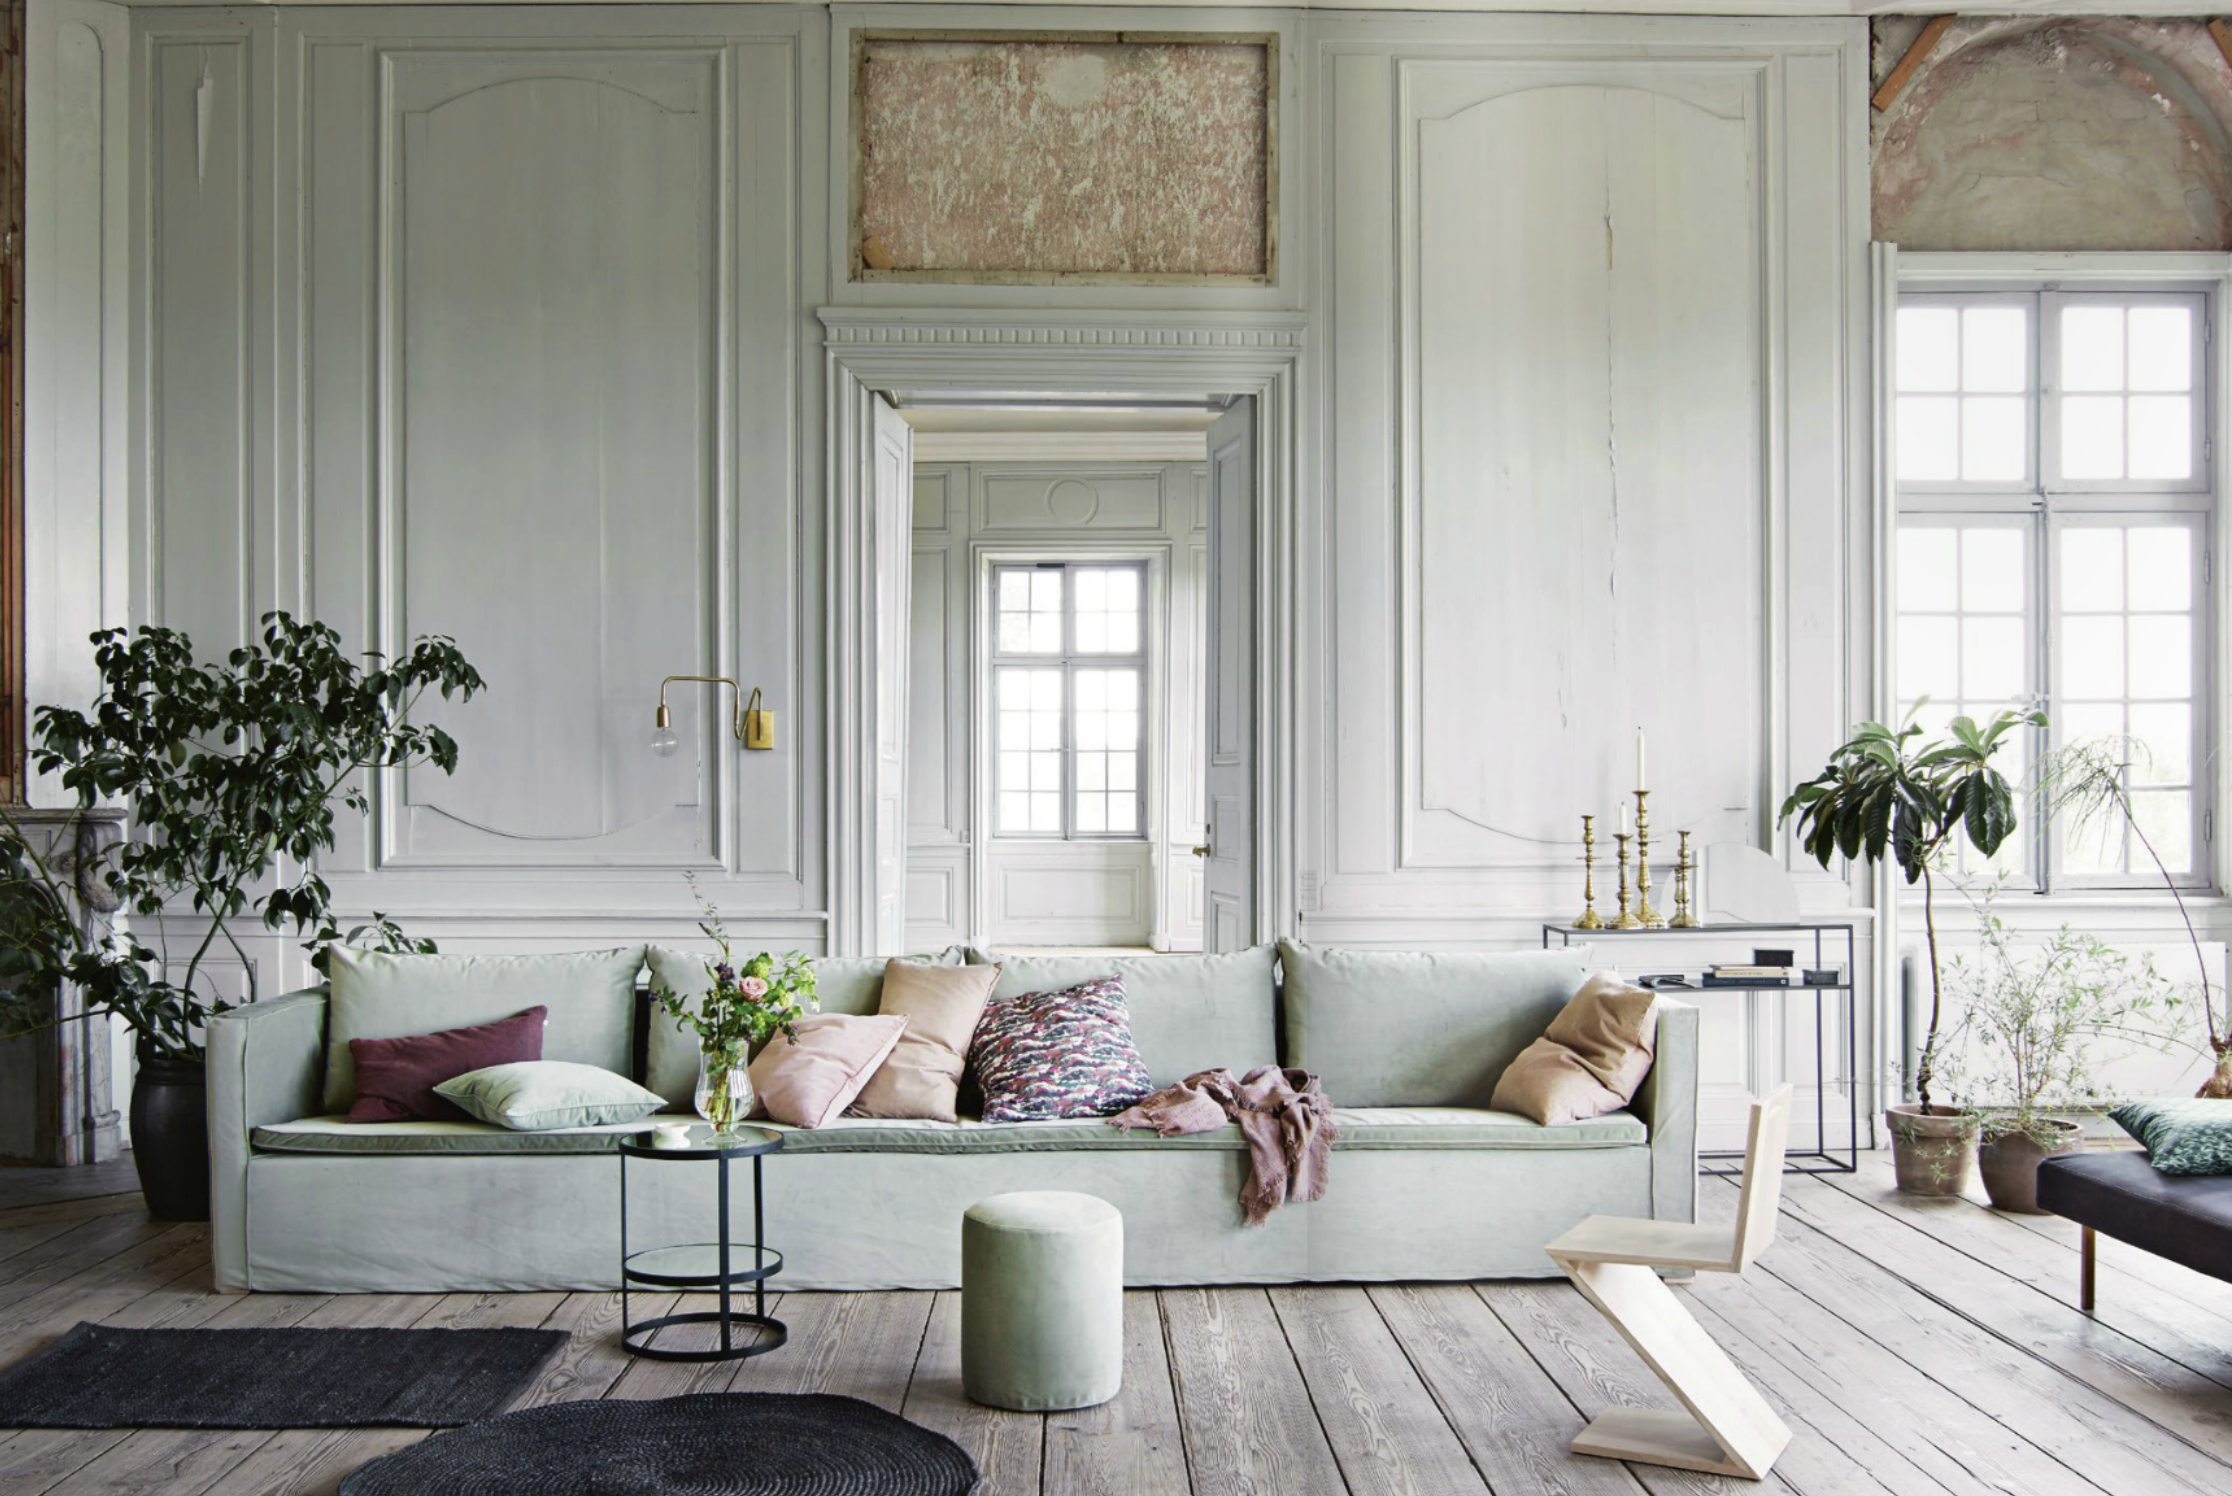 The Minimalist Elegance of Scandinavian Furniture